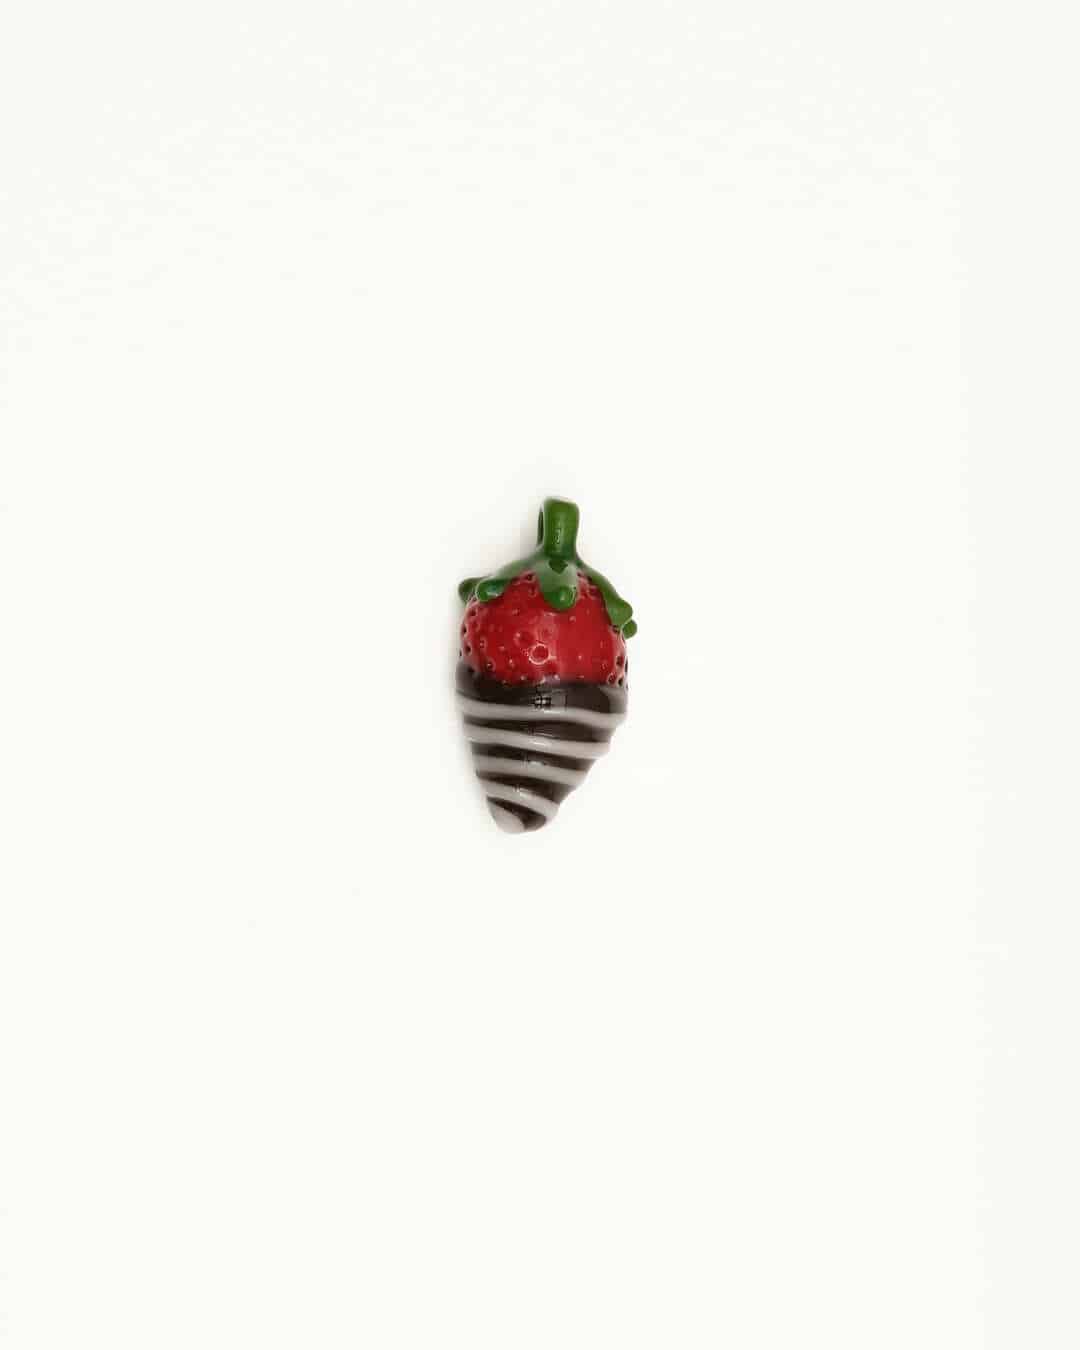 artisan-crafted glass pendant - (14C) Chocolate Strawberry Pendant by Gnarla Carla